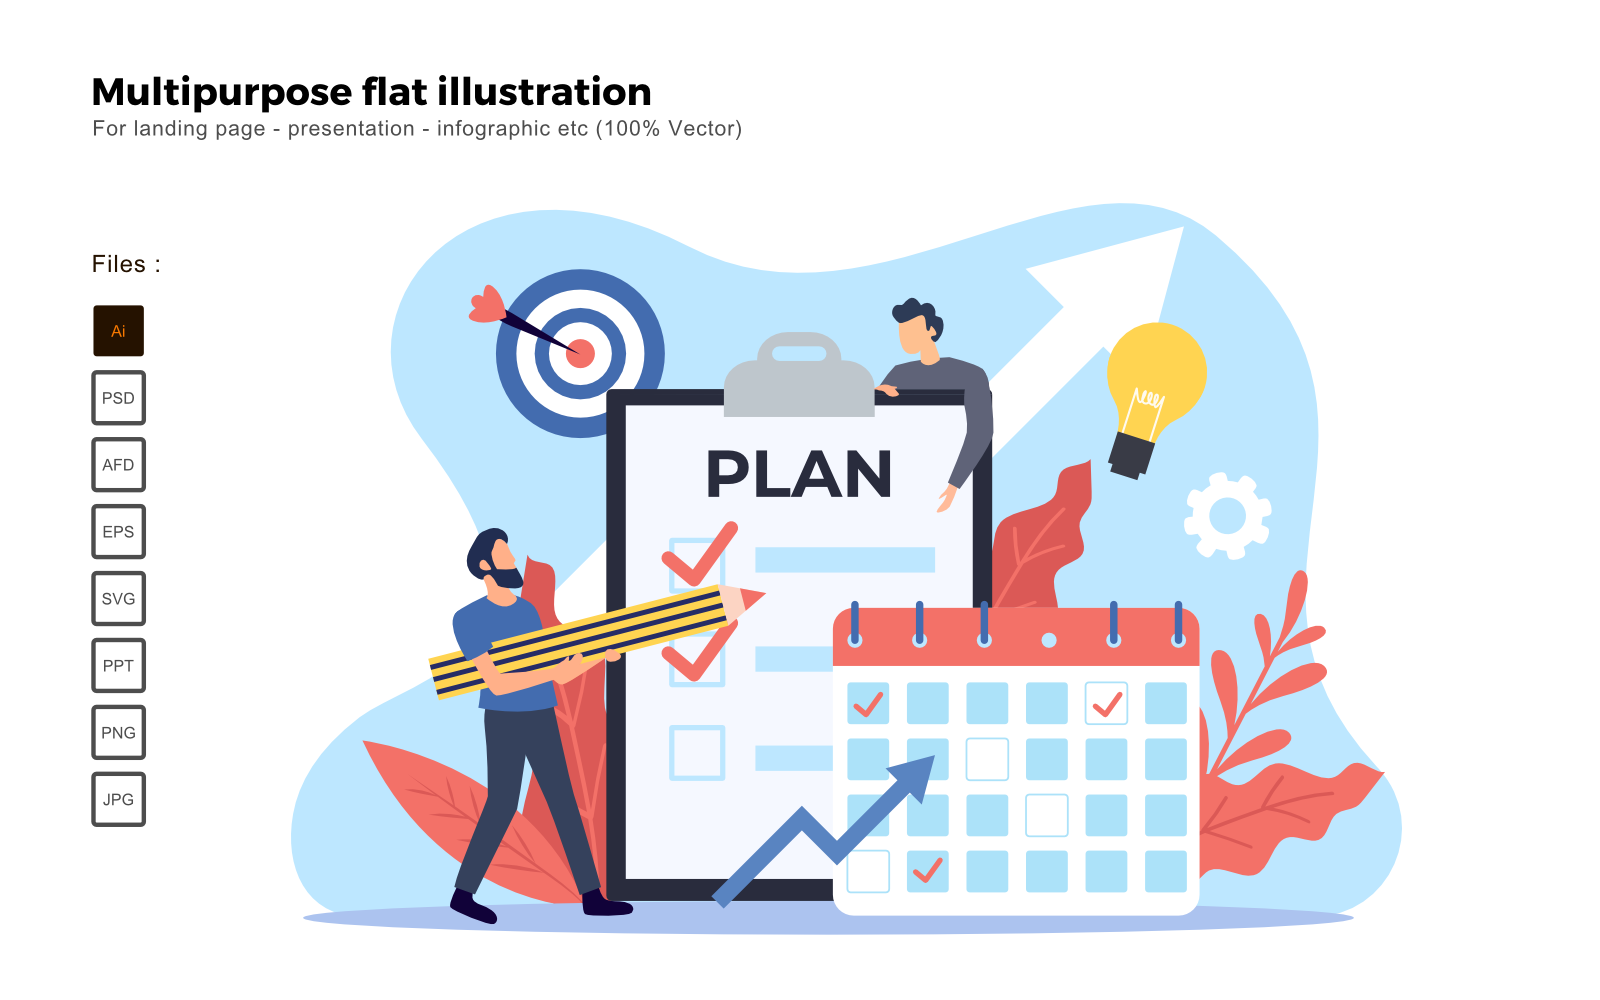 Multipurpose Flat Illustration Business Plan - Vector Image